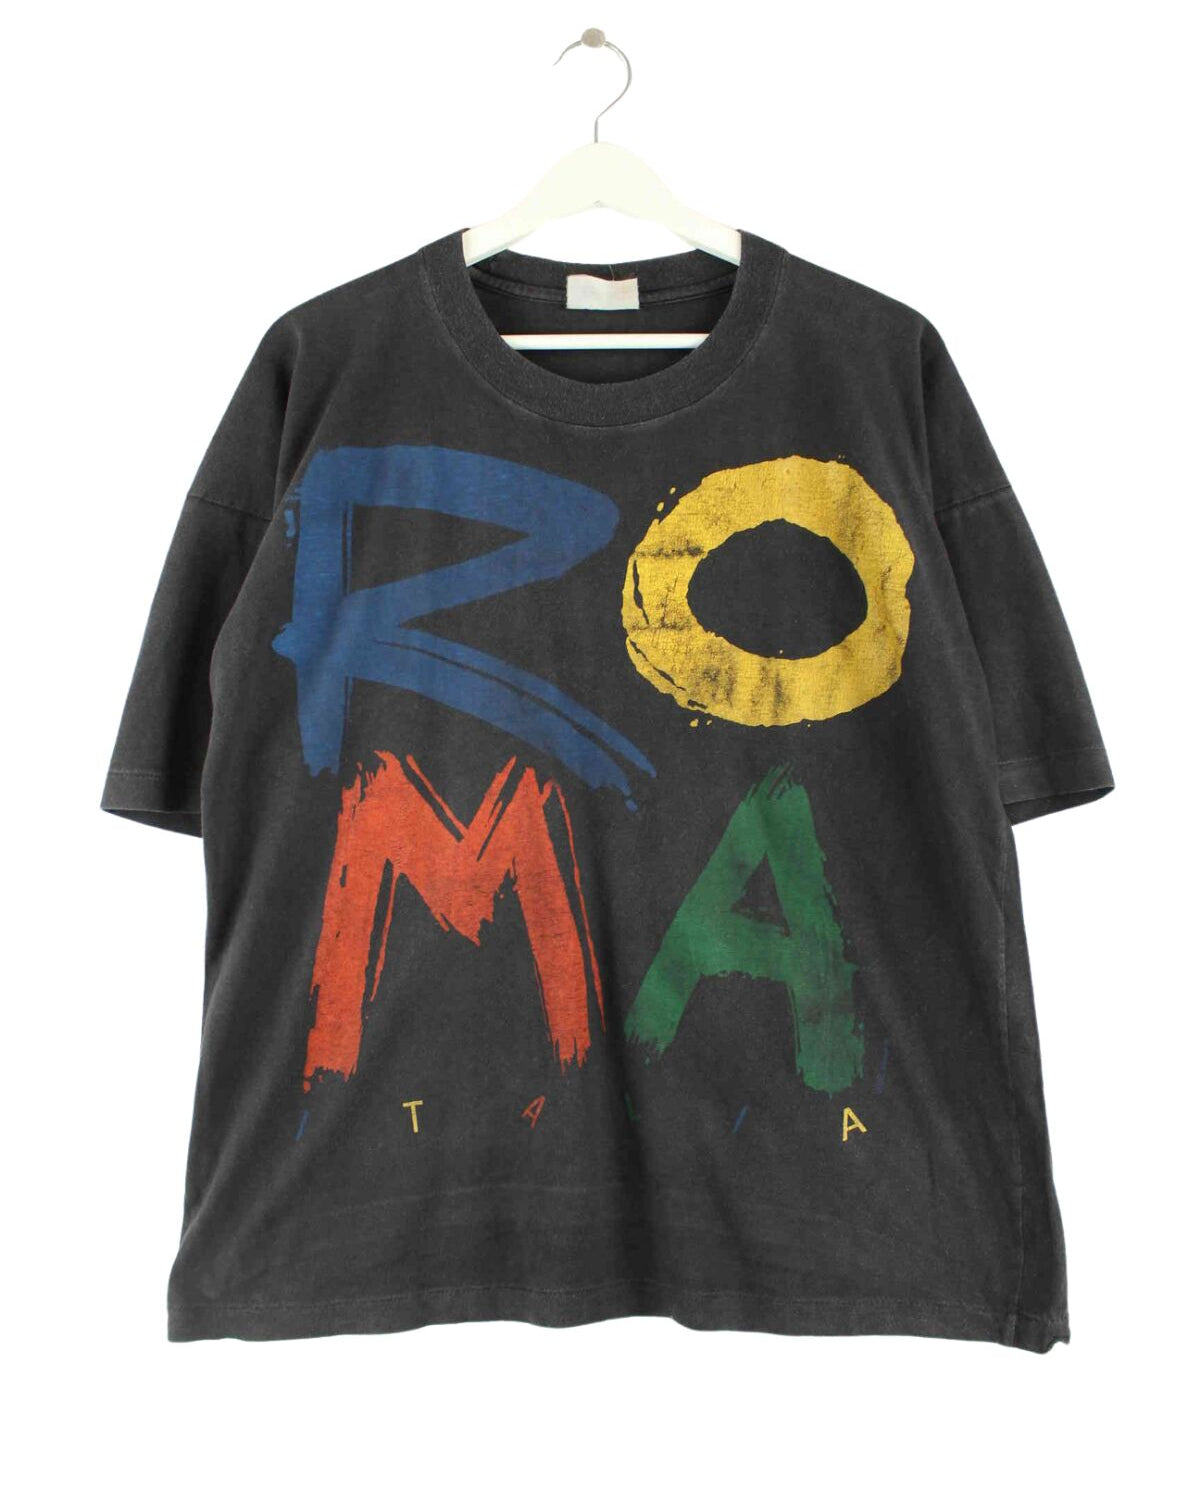 Vintage 90s Roma Print Single Stitch T-Shirt Schwarz S (front image)